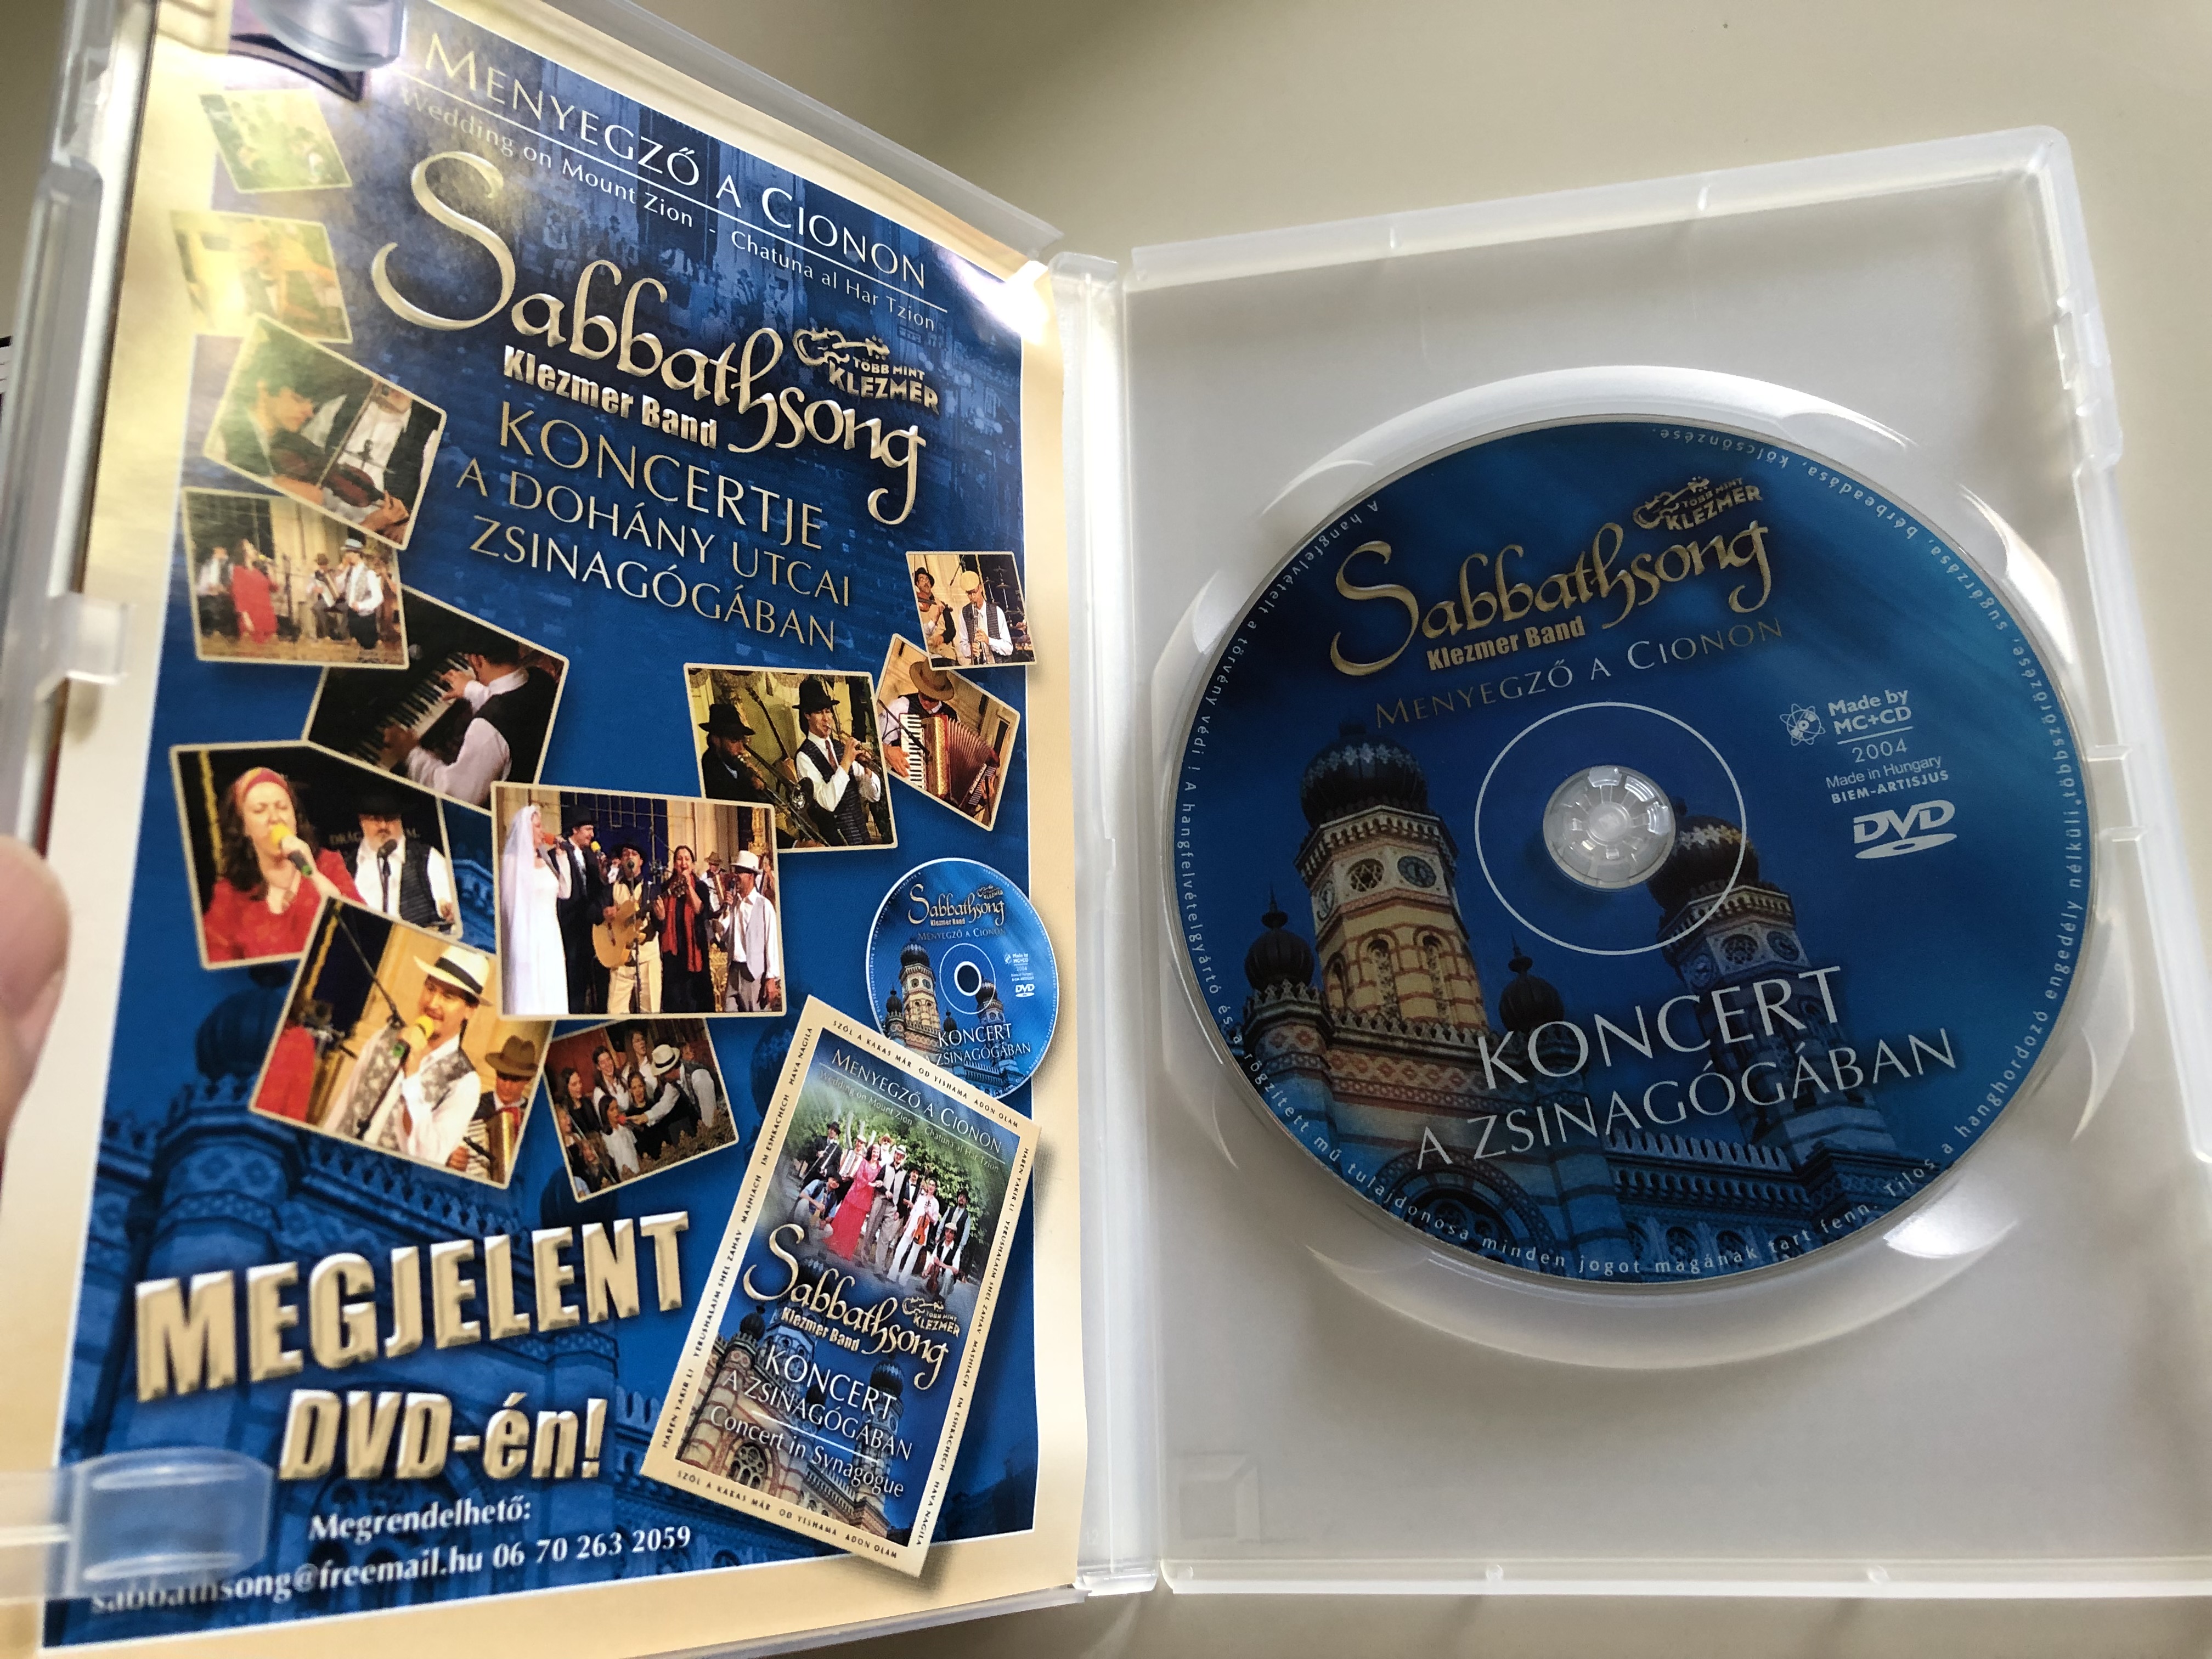 sabbathsong-klezmer-band-menyegz-a-cionon-dvd-2004-chatuan-al-har-tzion-wedding-on-mount-zion-concert-in-synagogue-t-bb-mint-klezmer-concert-video-2-.jpg